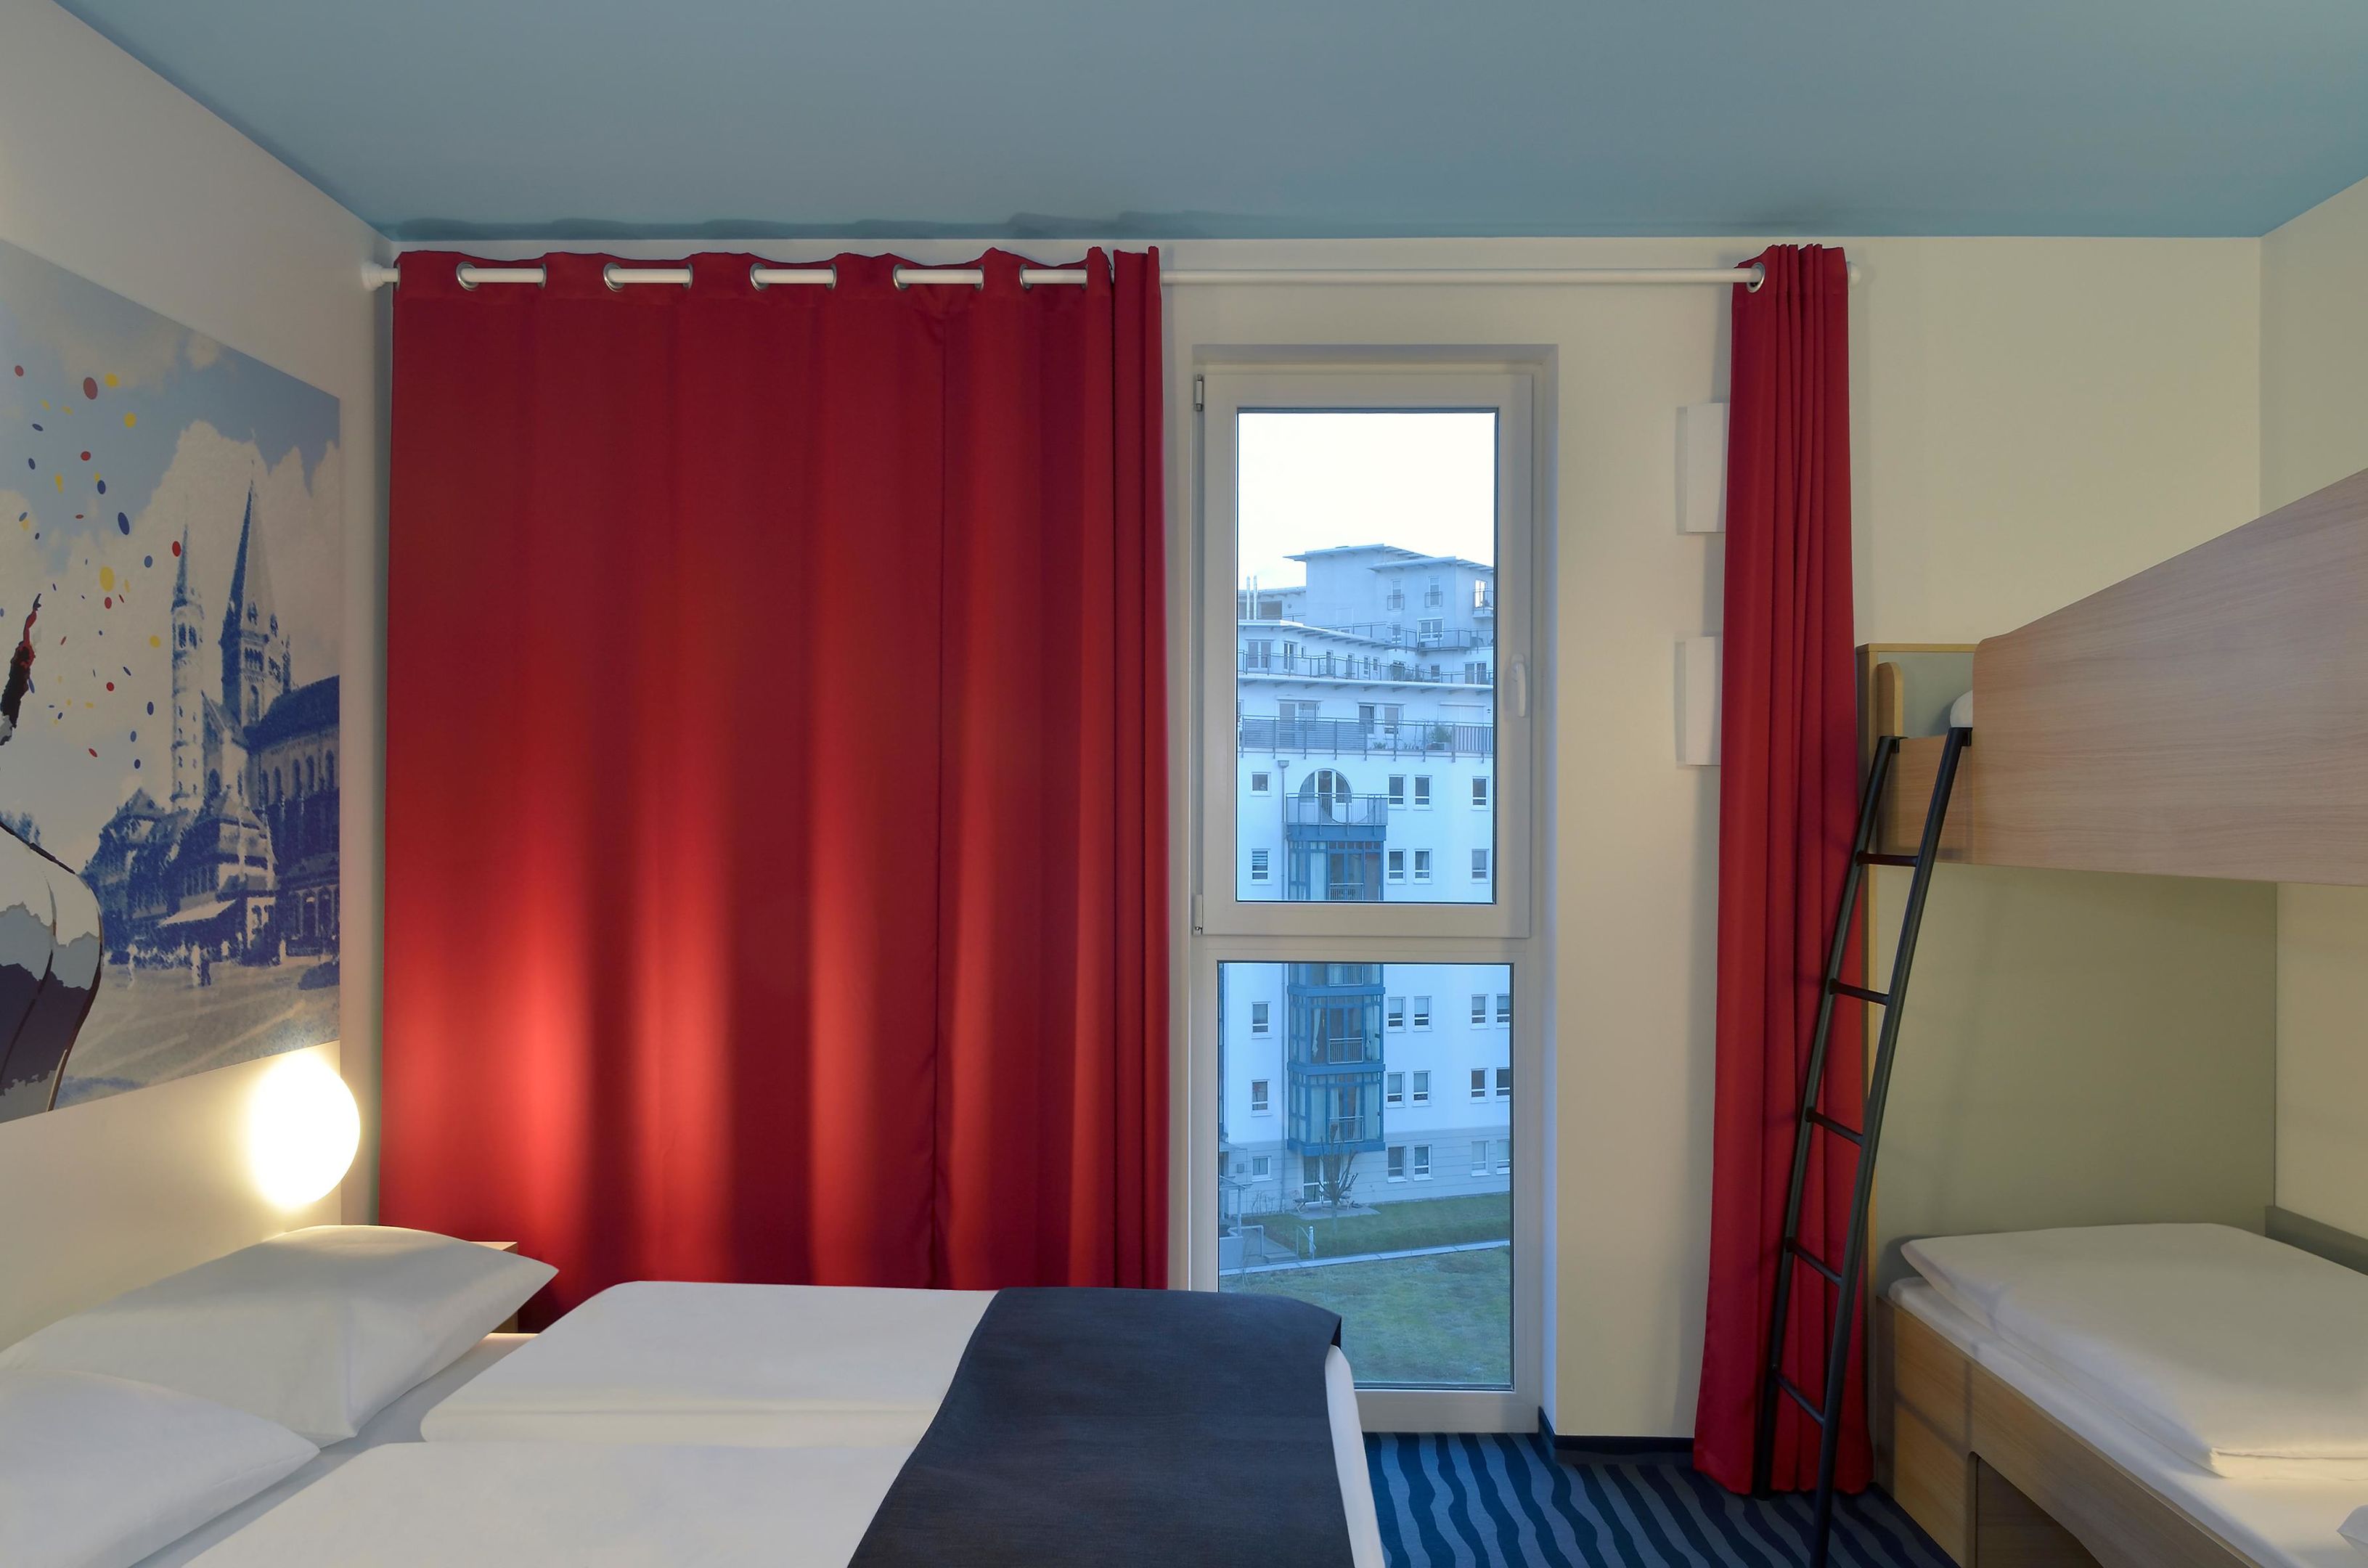 Bild 5 B&B Hotel Mainz-Hbf in Mainz